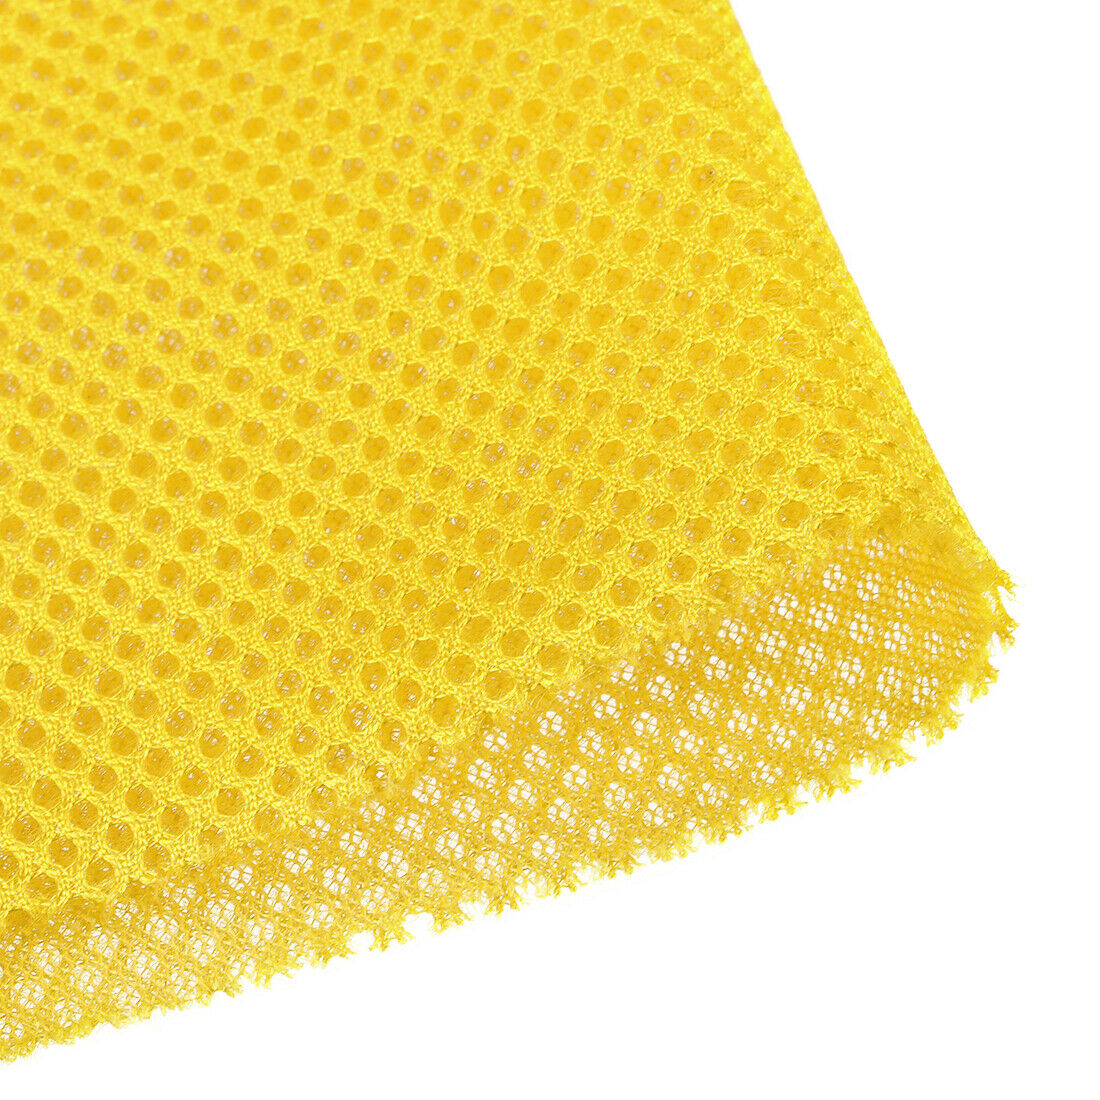 Yellow Speaker Mesh Grill Stereo Fabric Dustproof 50cm x 160cm 20